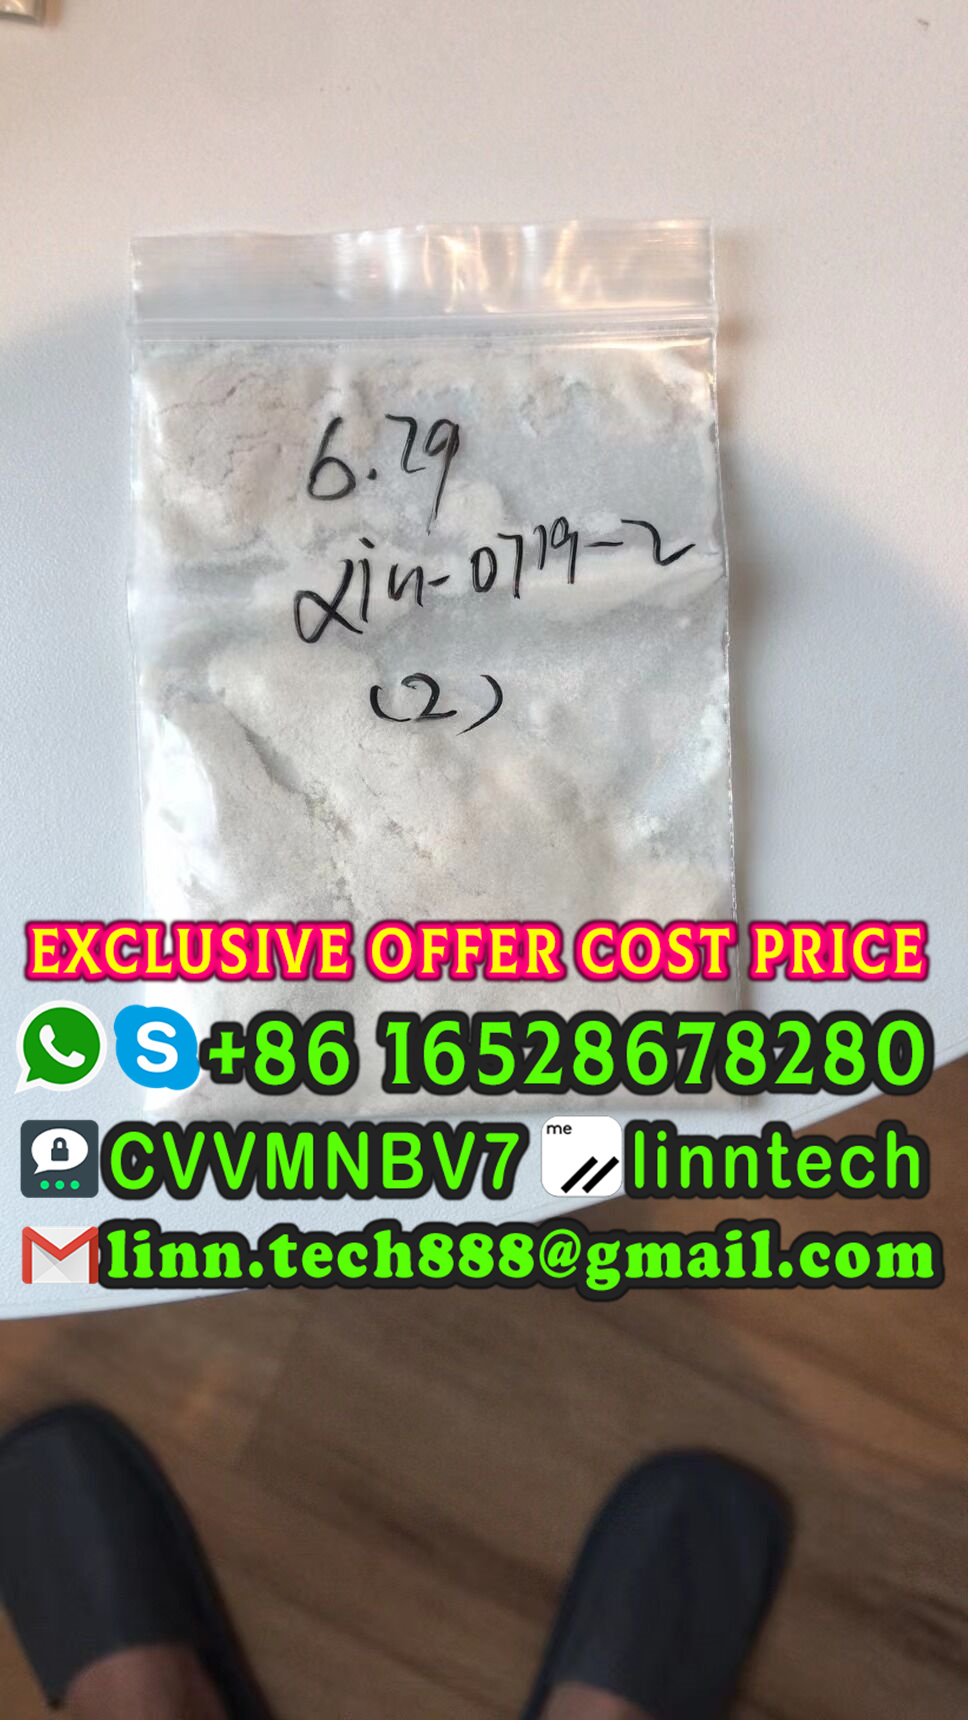 Buy New Brorphine Benzylfentanyl Carfentanil (CRM) Fentanyl powder